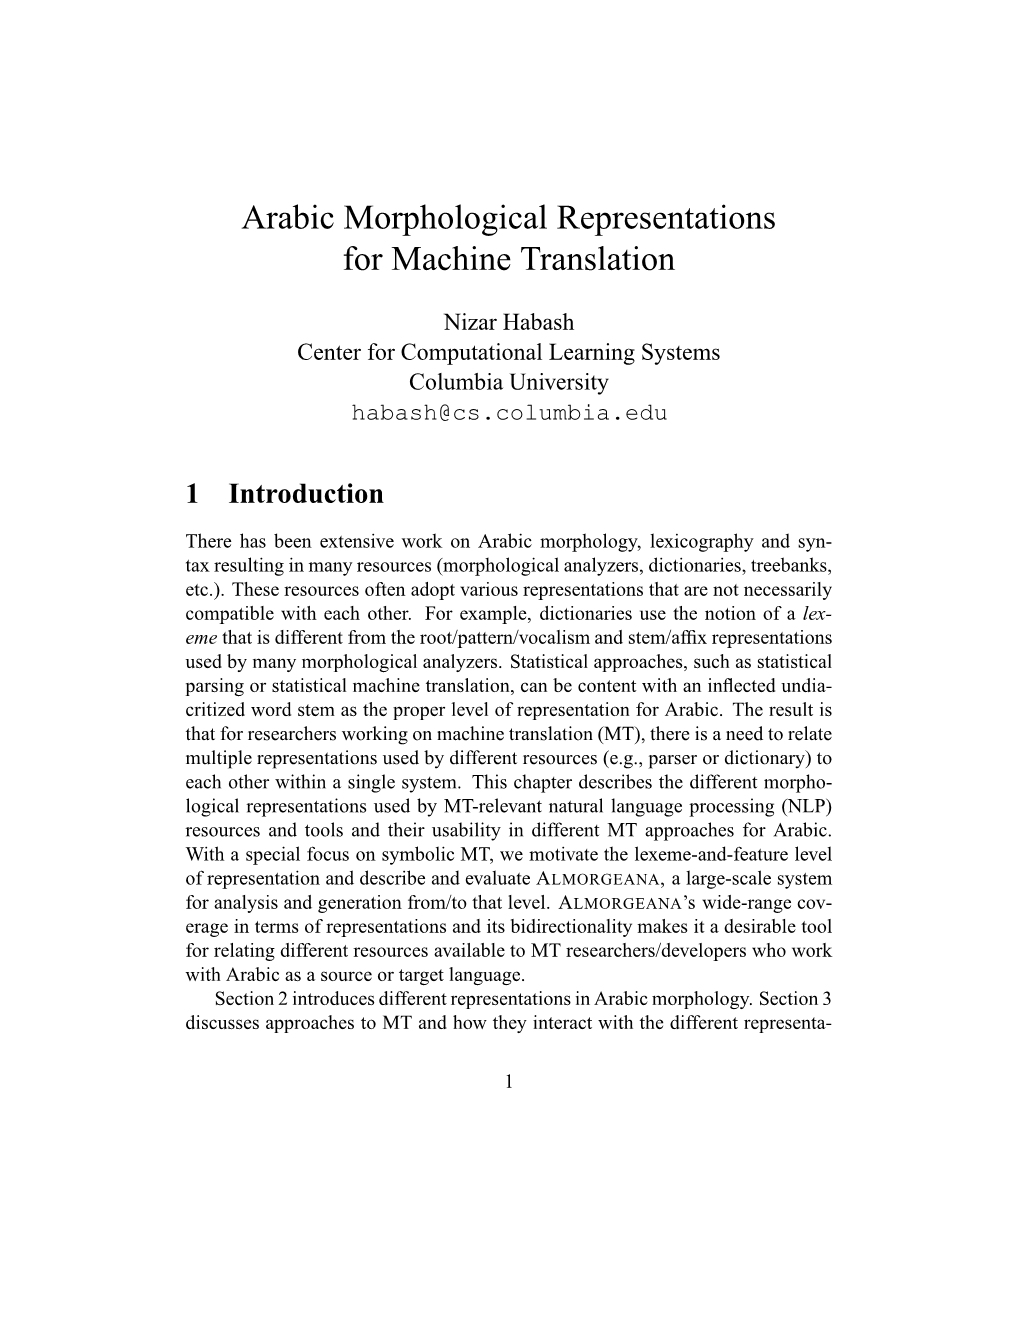 Arabic Morphological Representations for Machine Translation